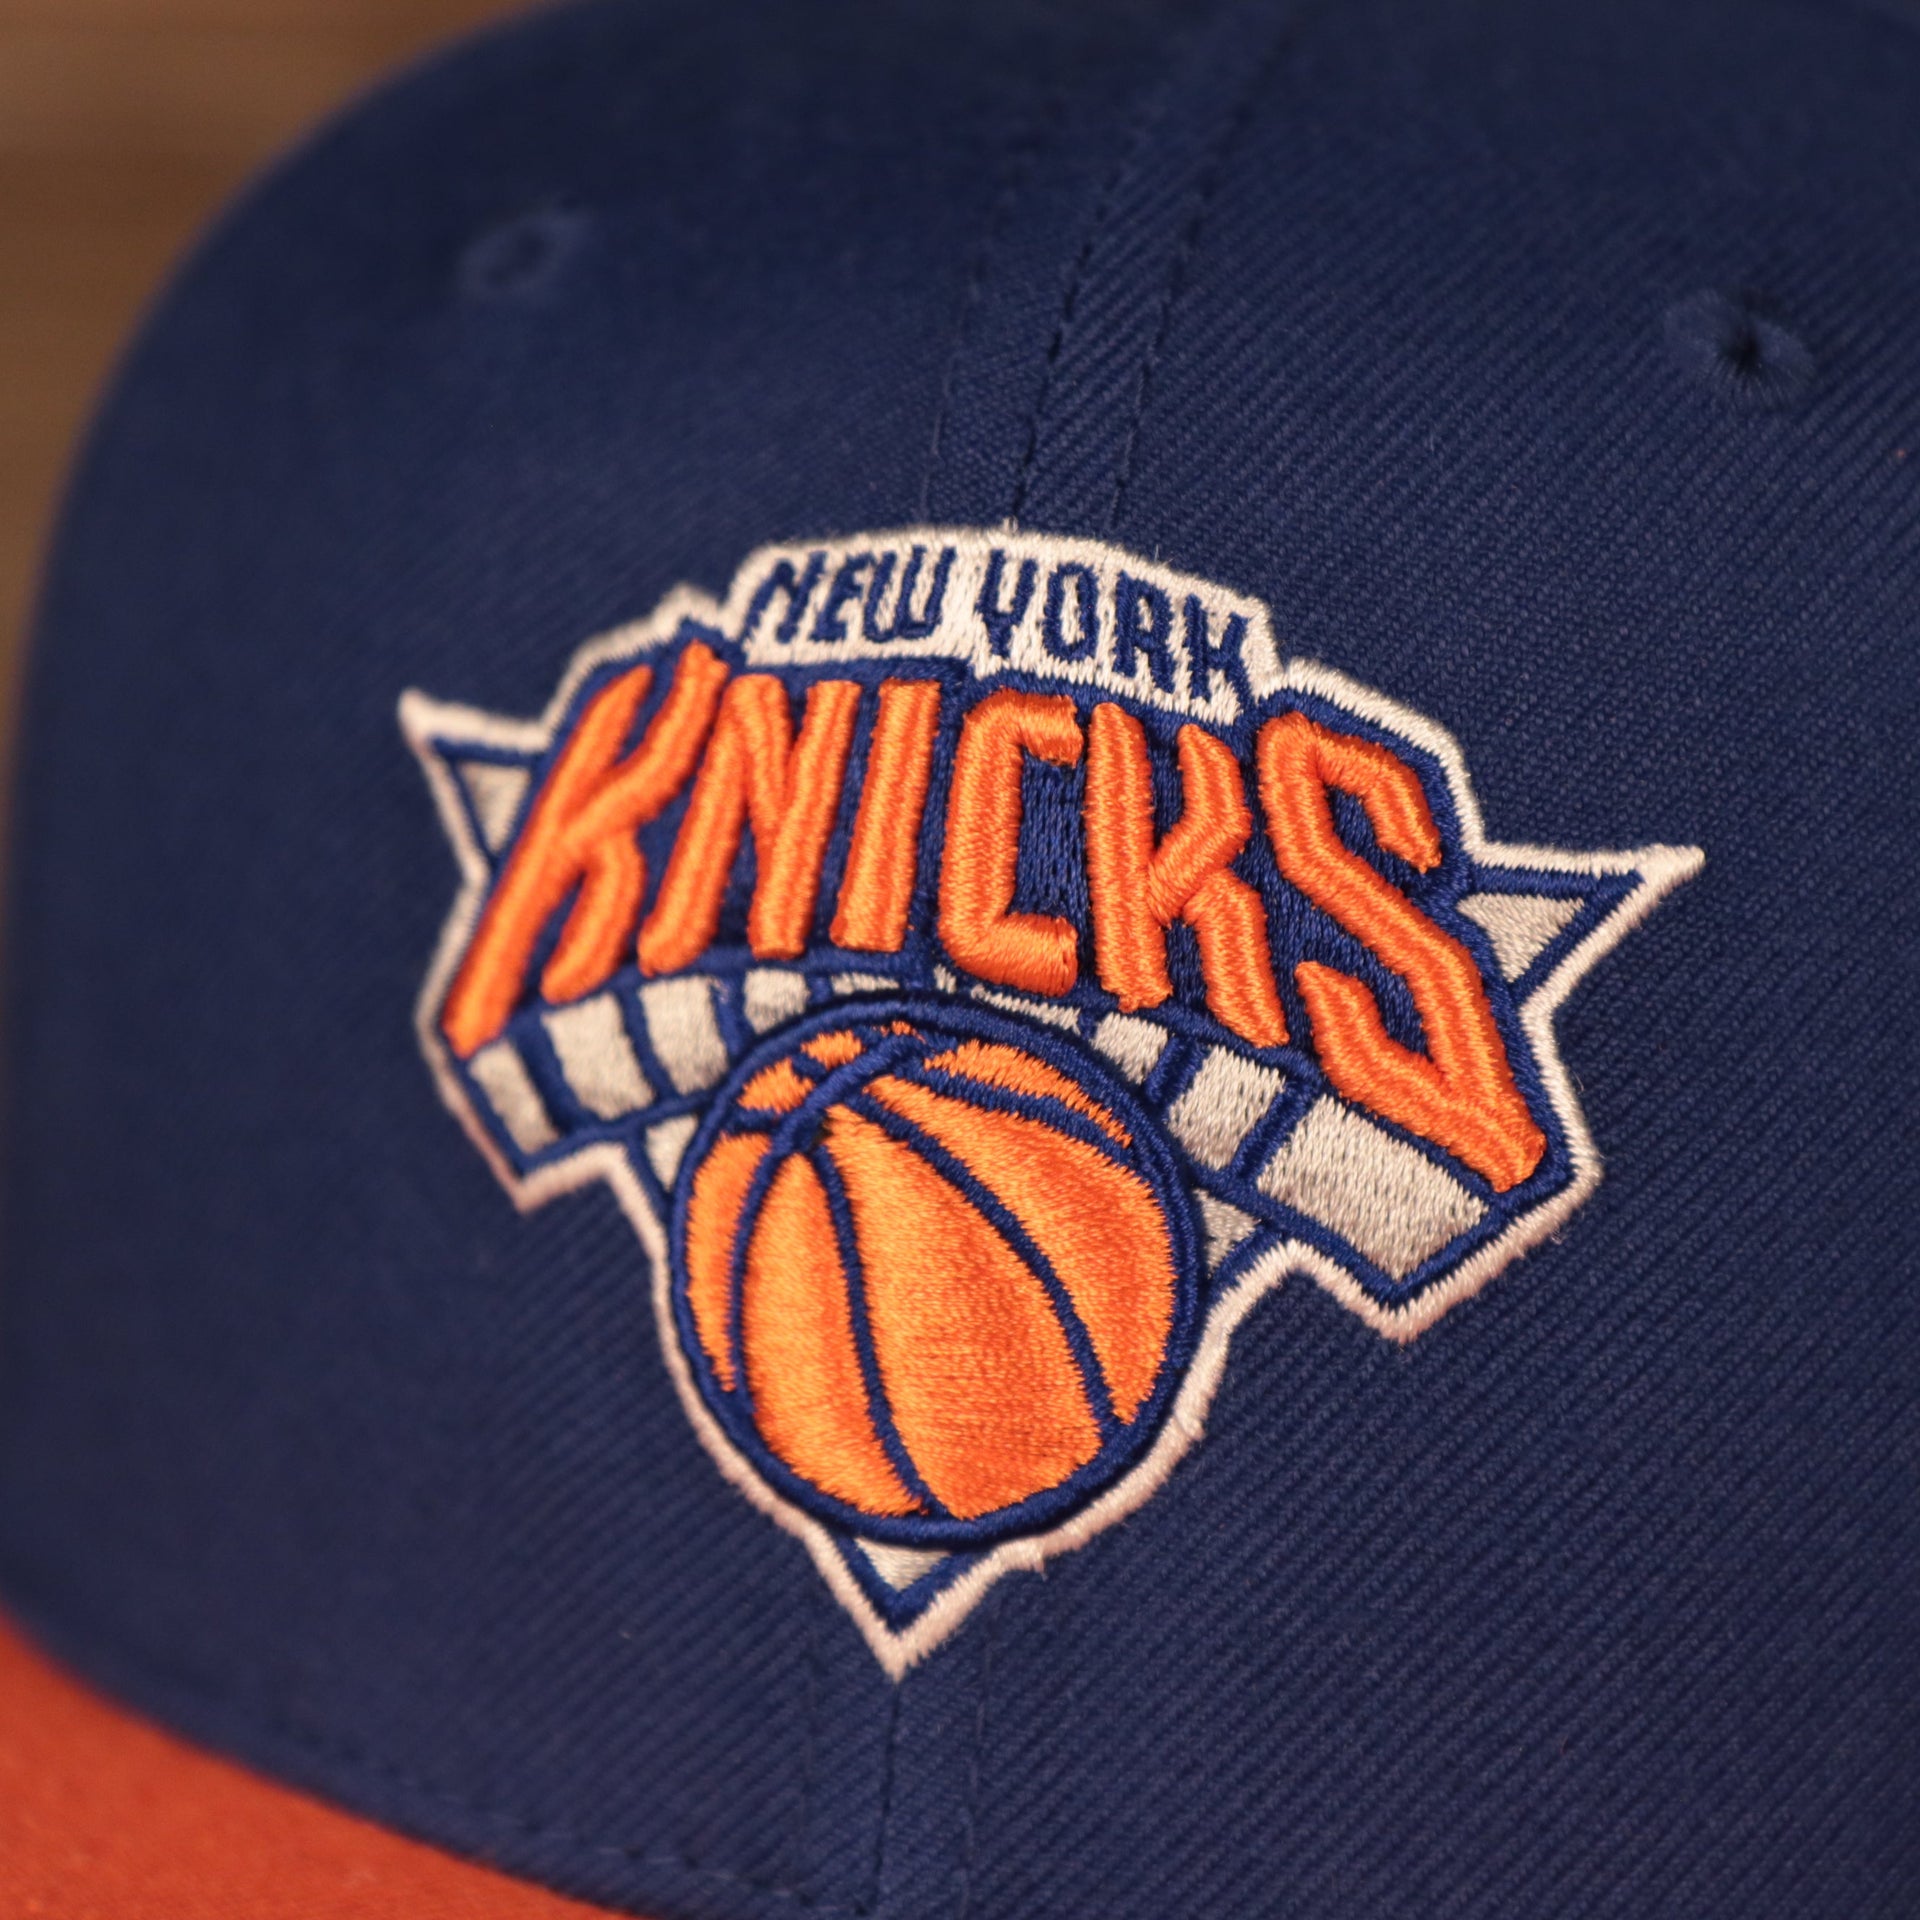 knicks logo New York Knicks Royal Blue and Orange Adjustable Grey Bottom Snapback Hat